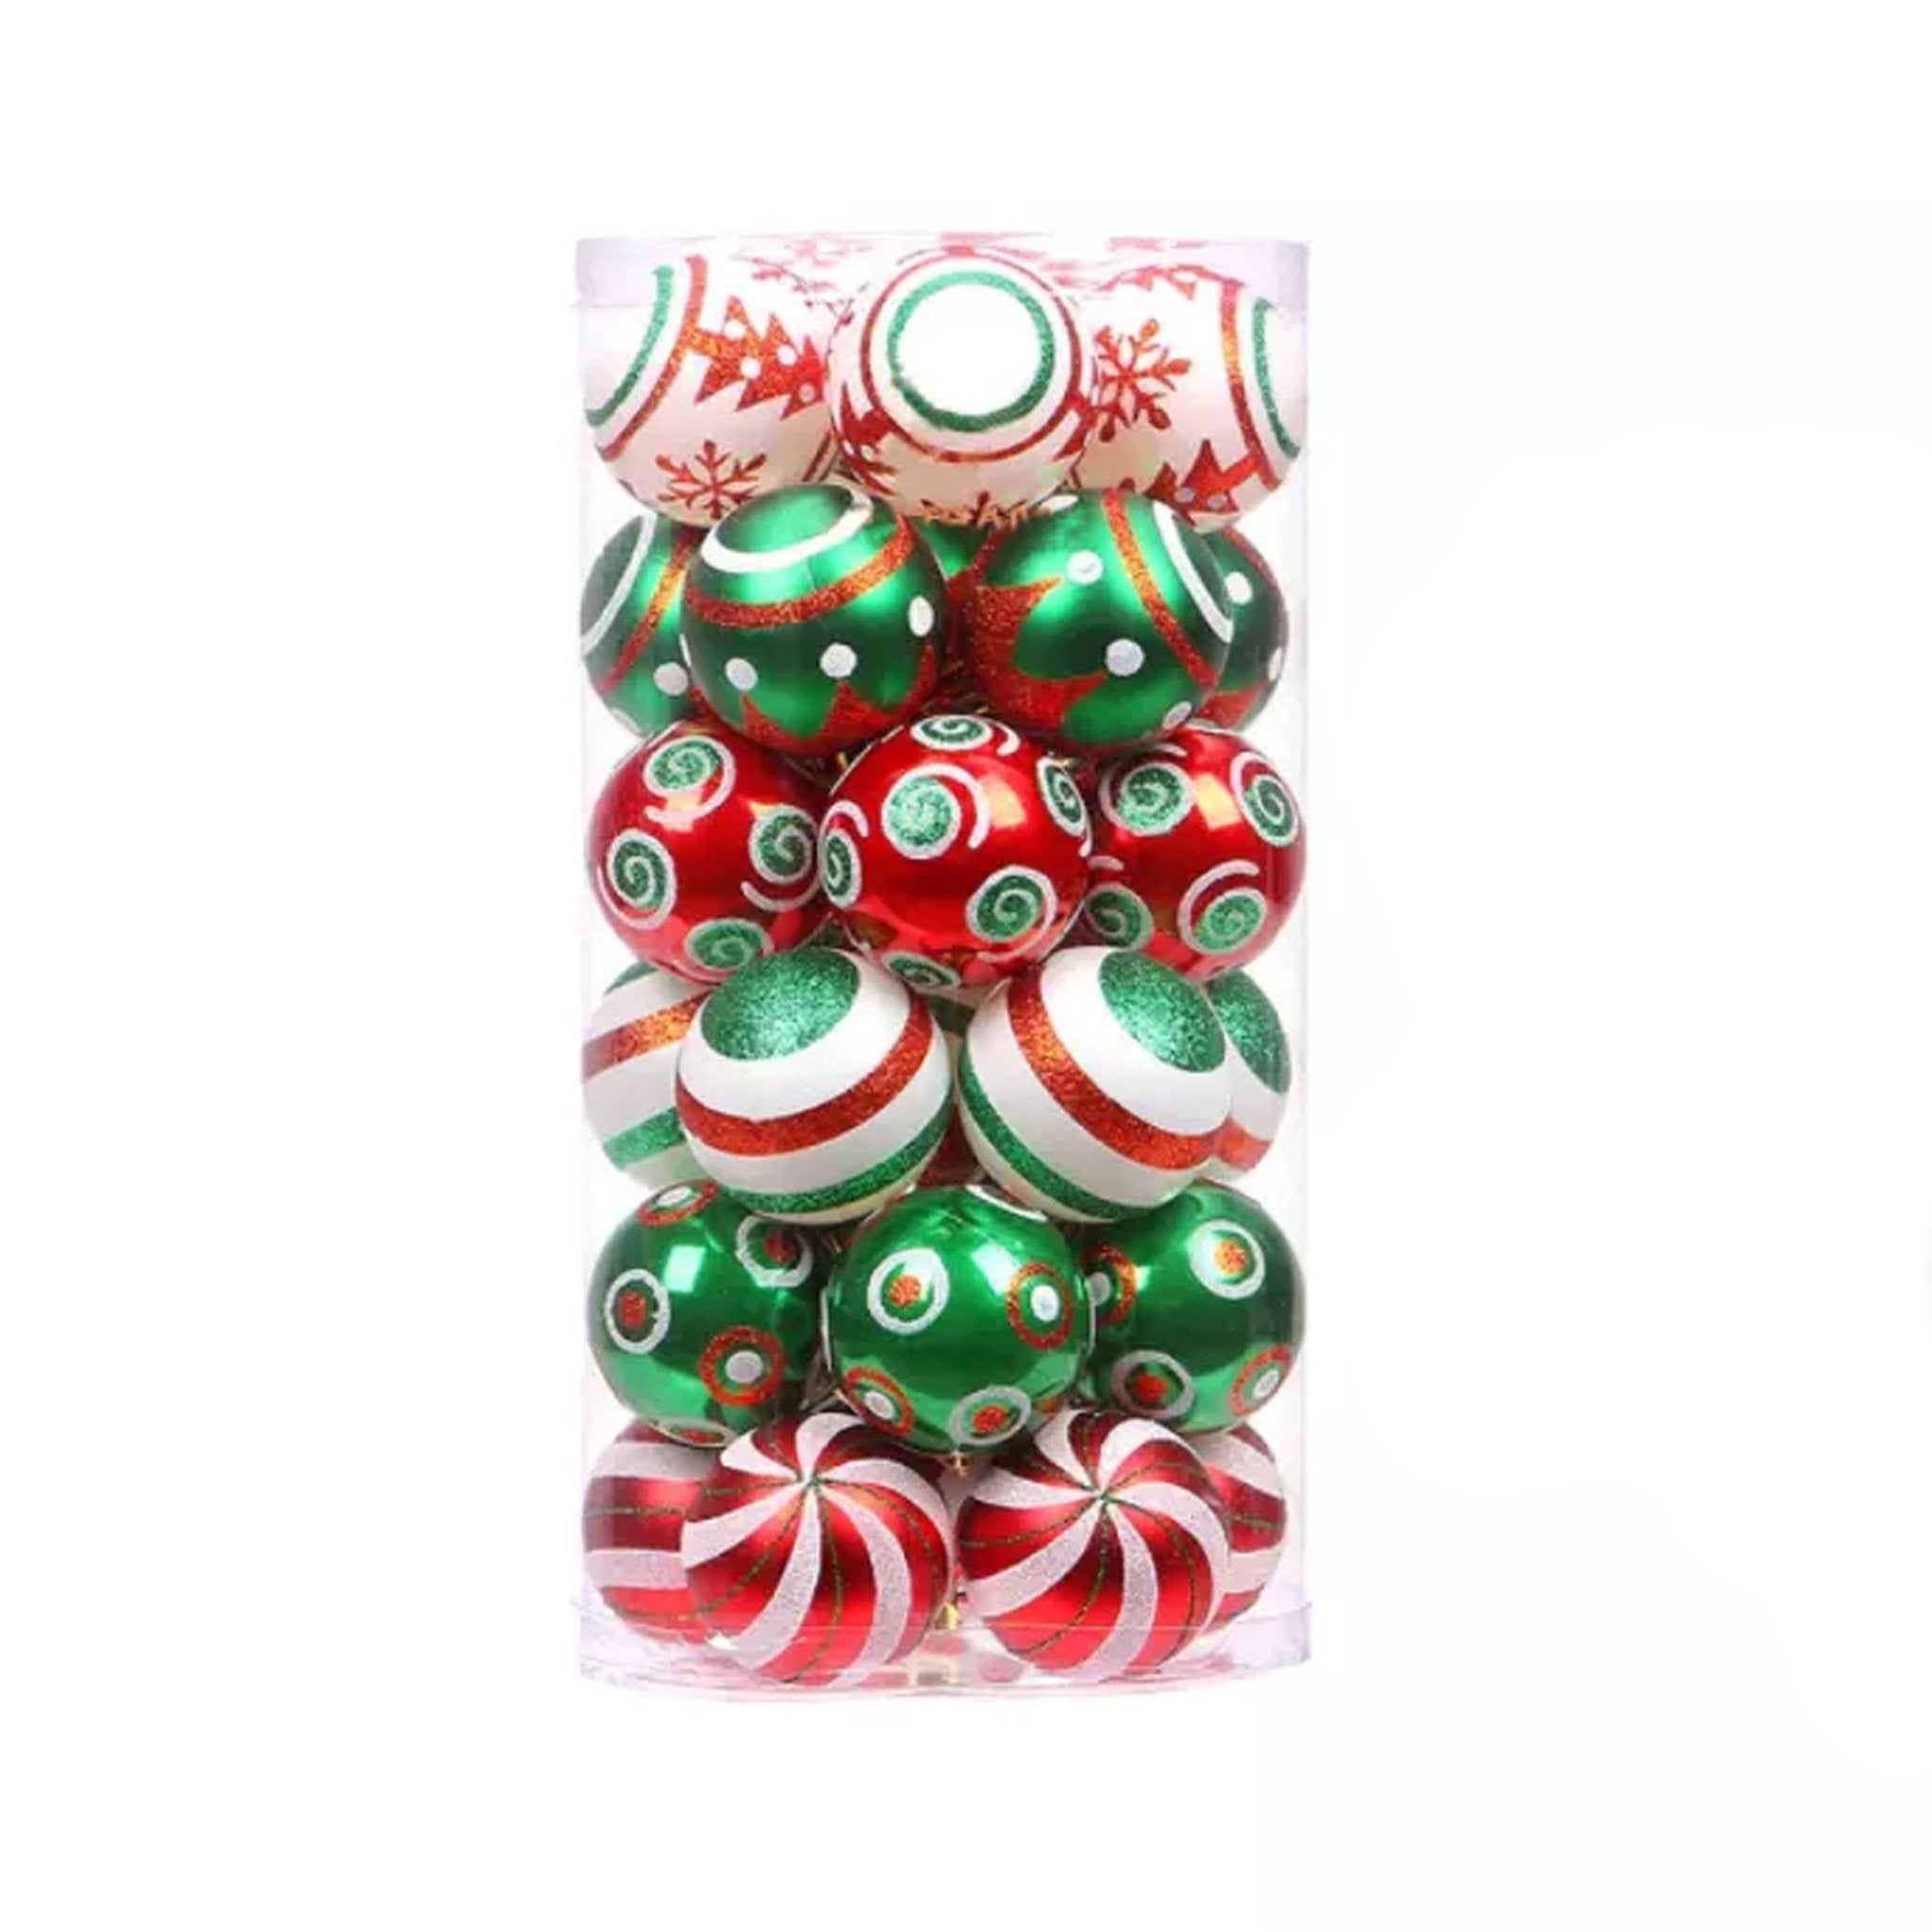 30pcs 6cm Elf decorative shatterproof ornament set 06030001 - MODA FLORA Santa's Workshop